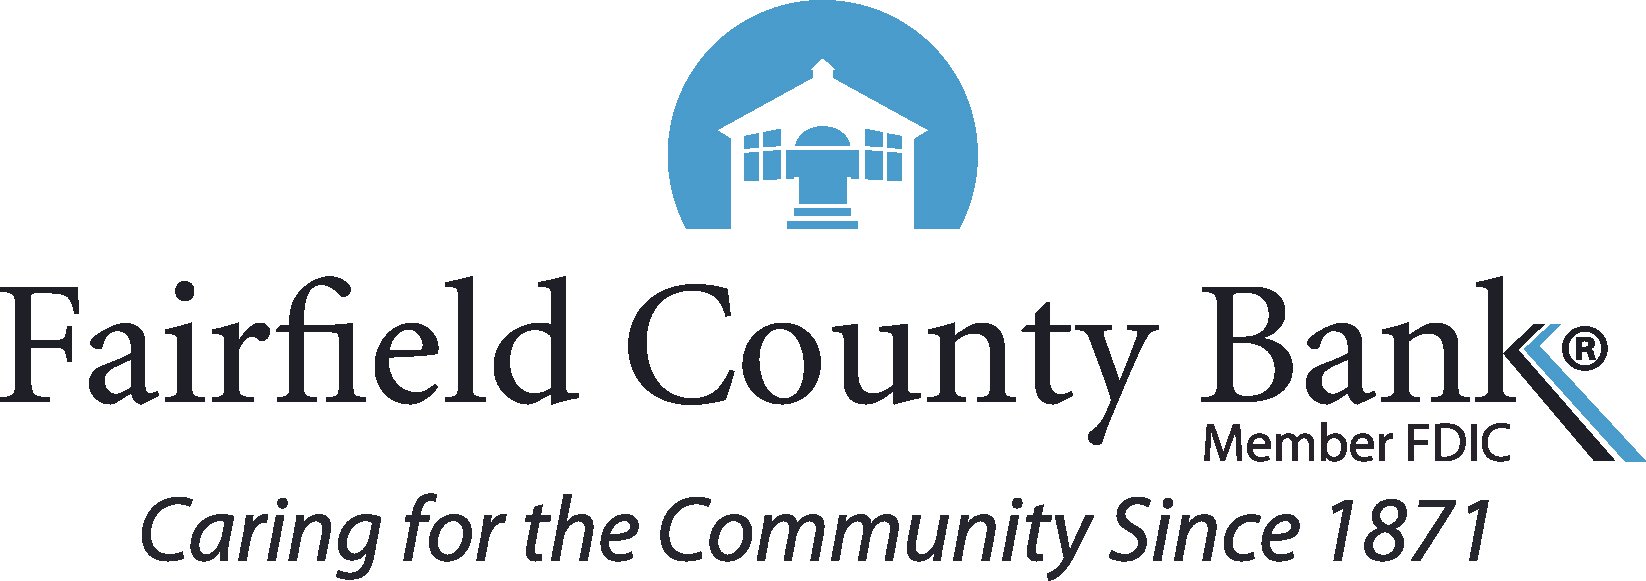 Fairfield County Bank preferred logo caring tag (002).jpg